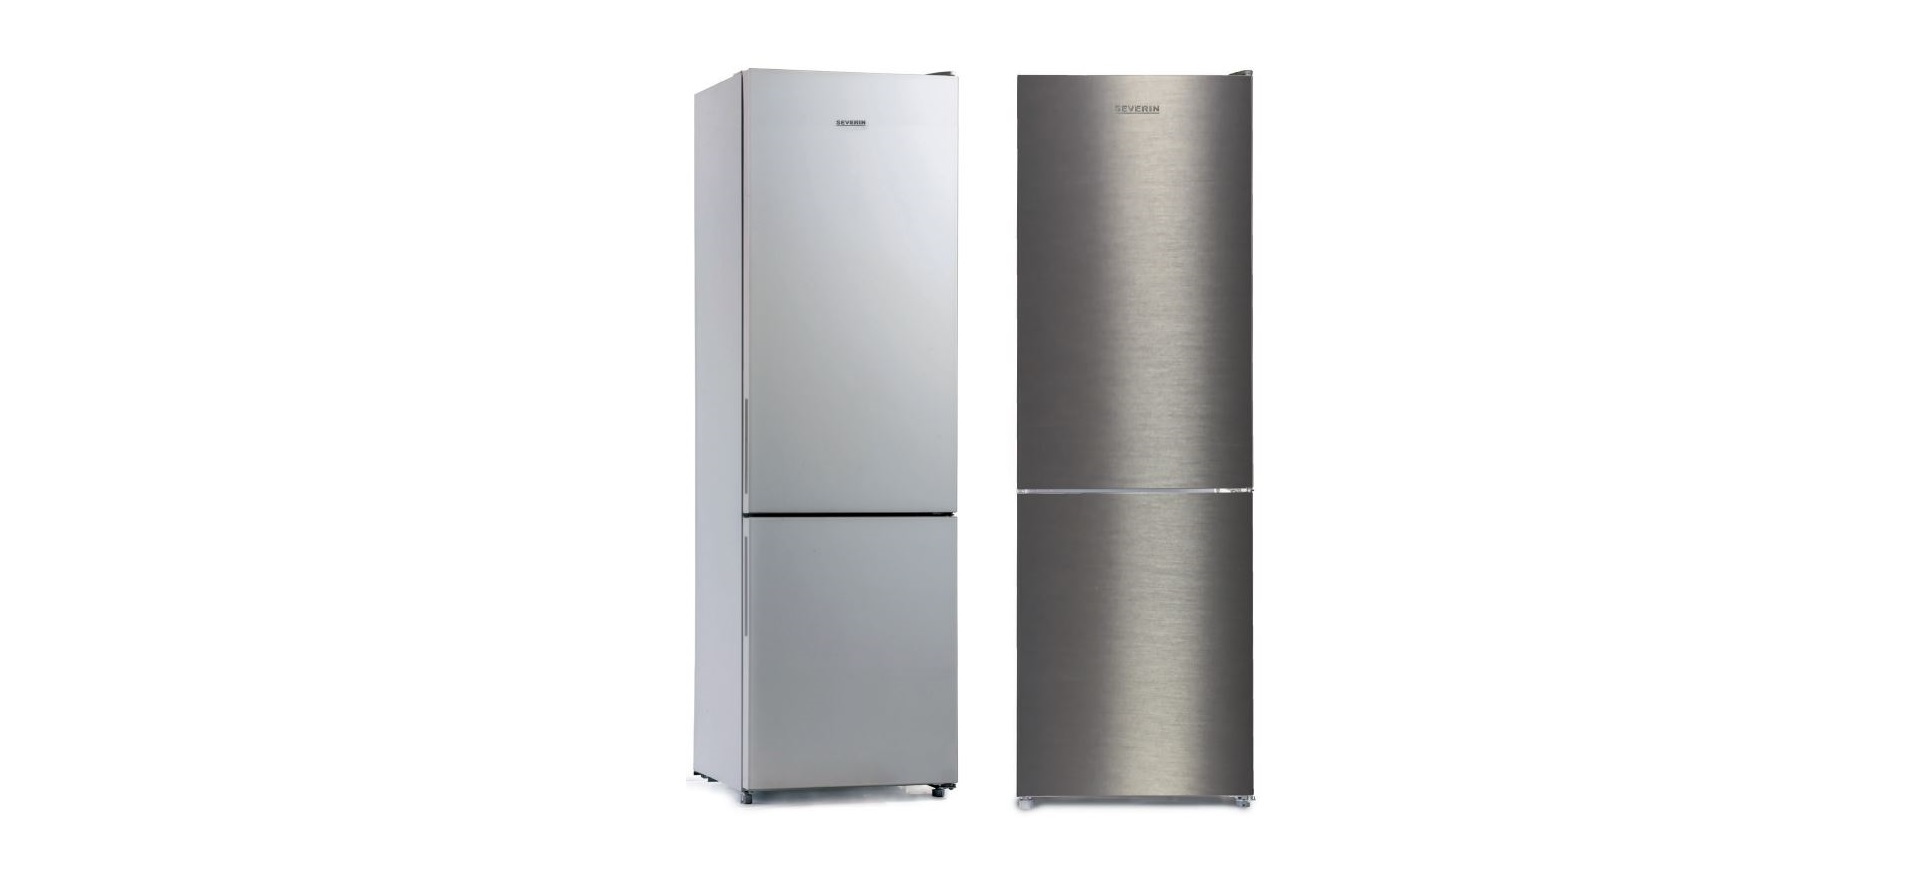 KGK 8905, 8906 Refrigerator Freezer